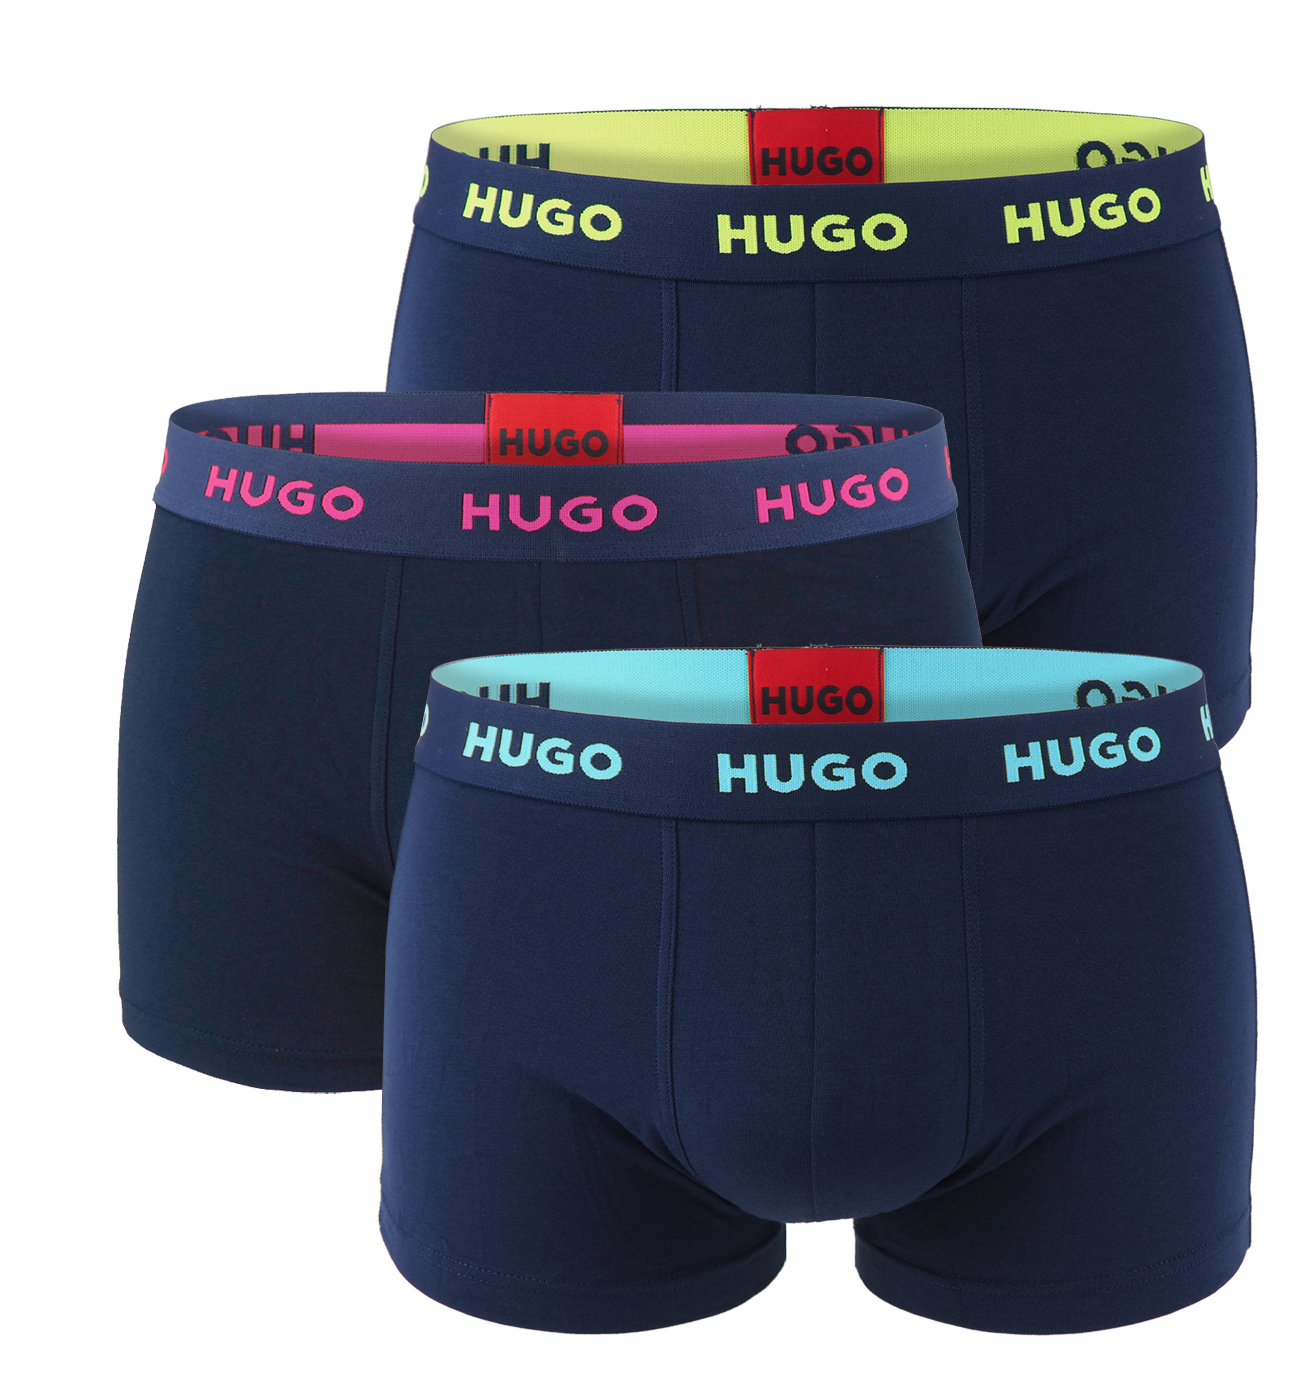 HUGO - boxerky 3PACK cotton stretch dark blue with multicolor logo waist - limitovaná fashion edícia (HUGO BOSS)